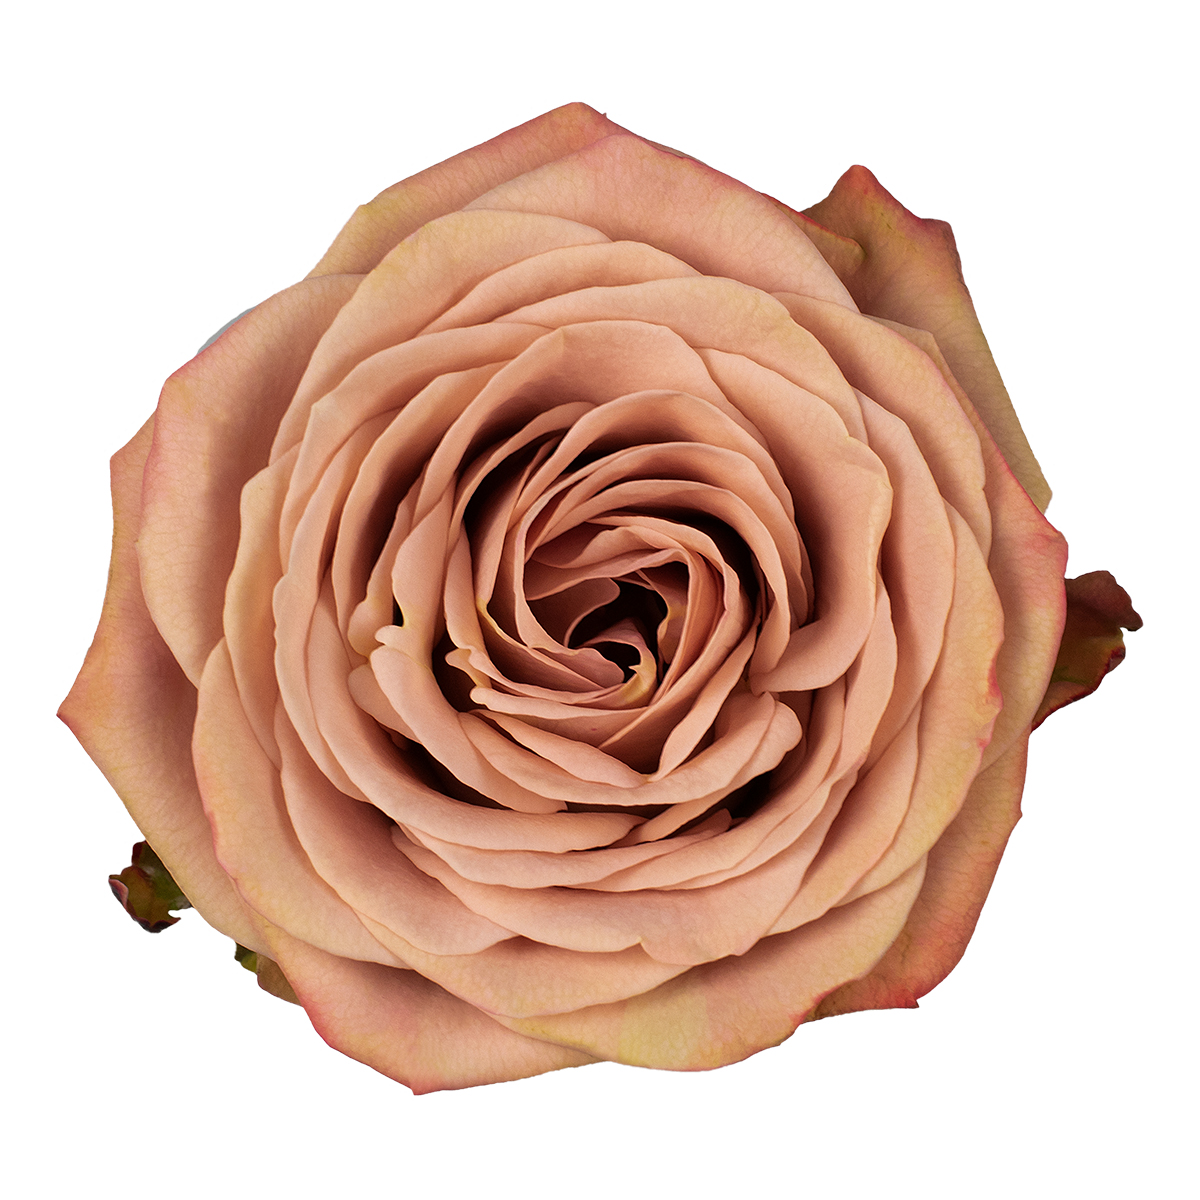 CAPPUCCINO rose - Florist Rose Paradise! - Decofresh TOTF2020 on Thursd